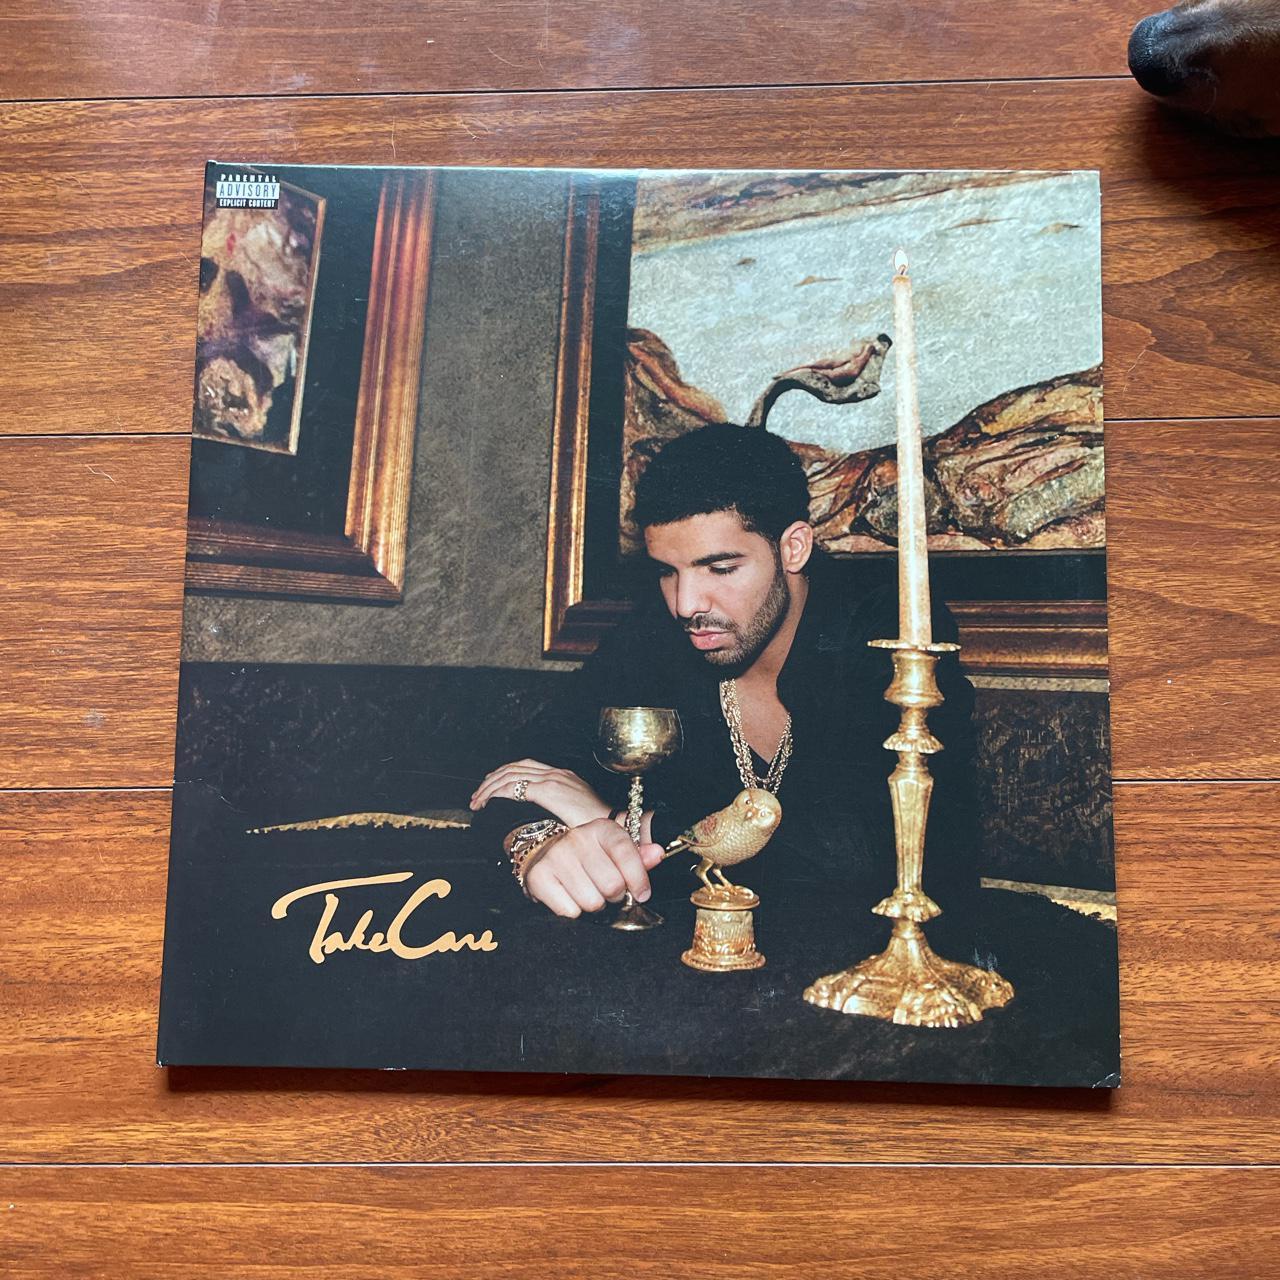 Product Image 1 - Drake Vinyl Record
Take Care Album
2